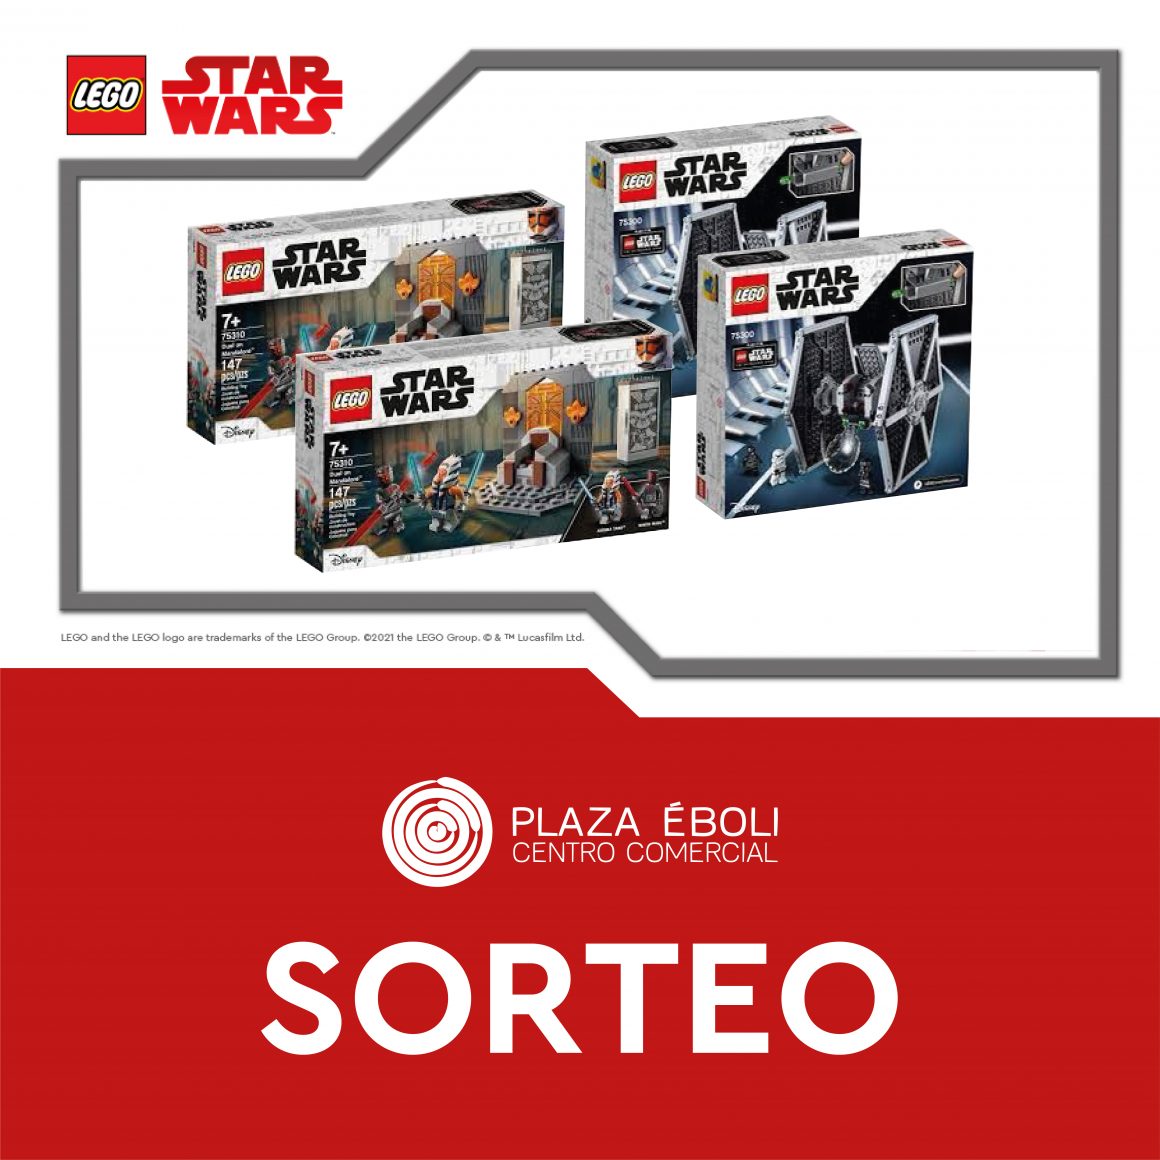 SORTEO LEGO STAR WARS